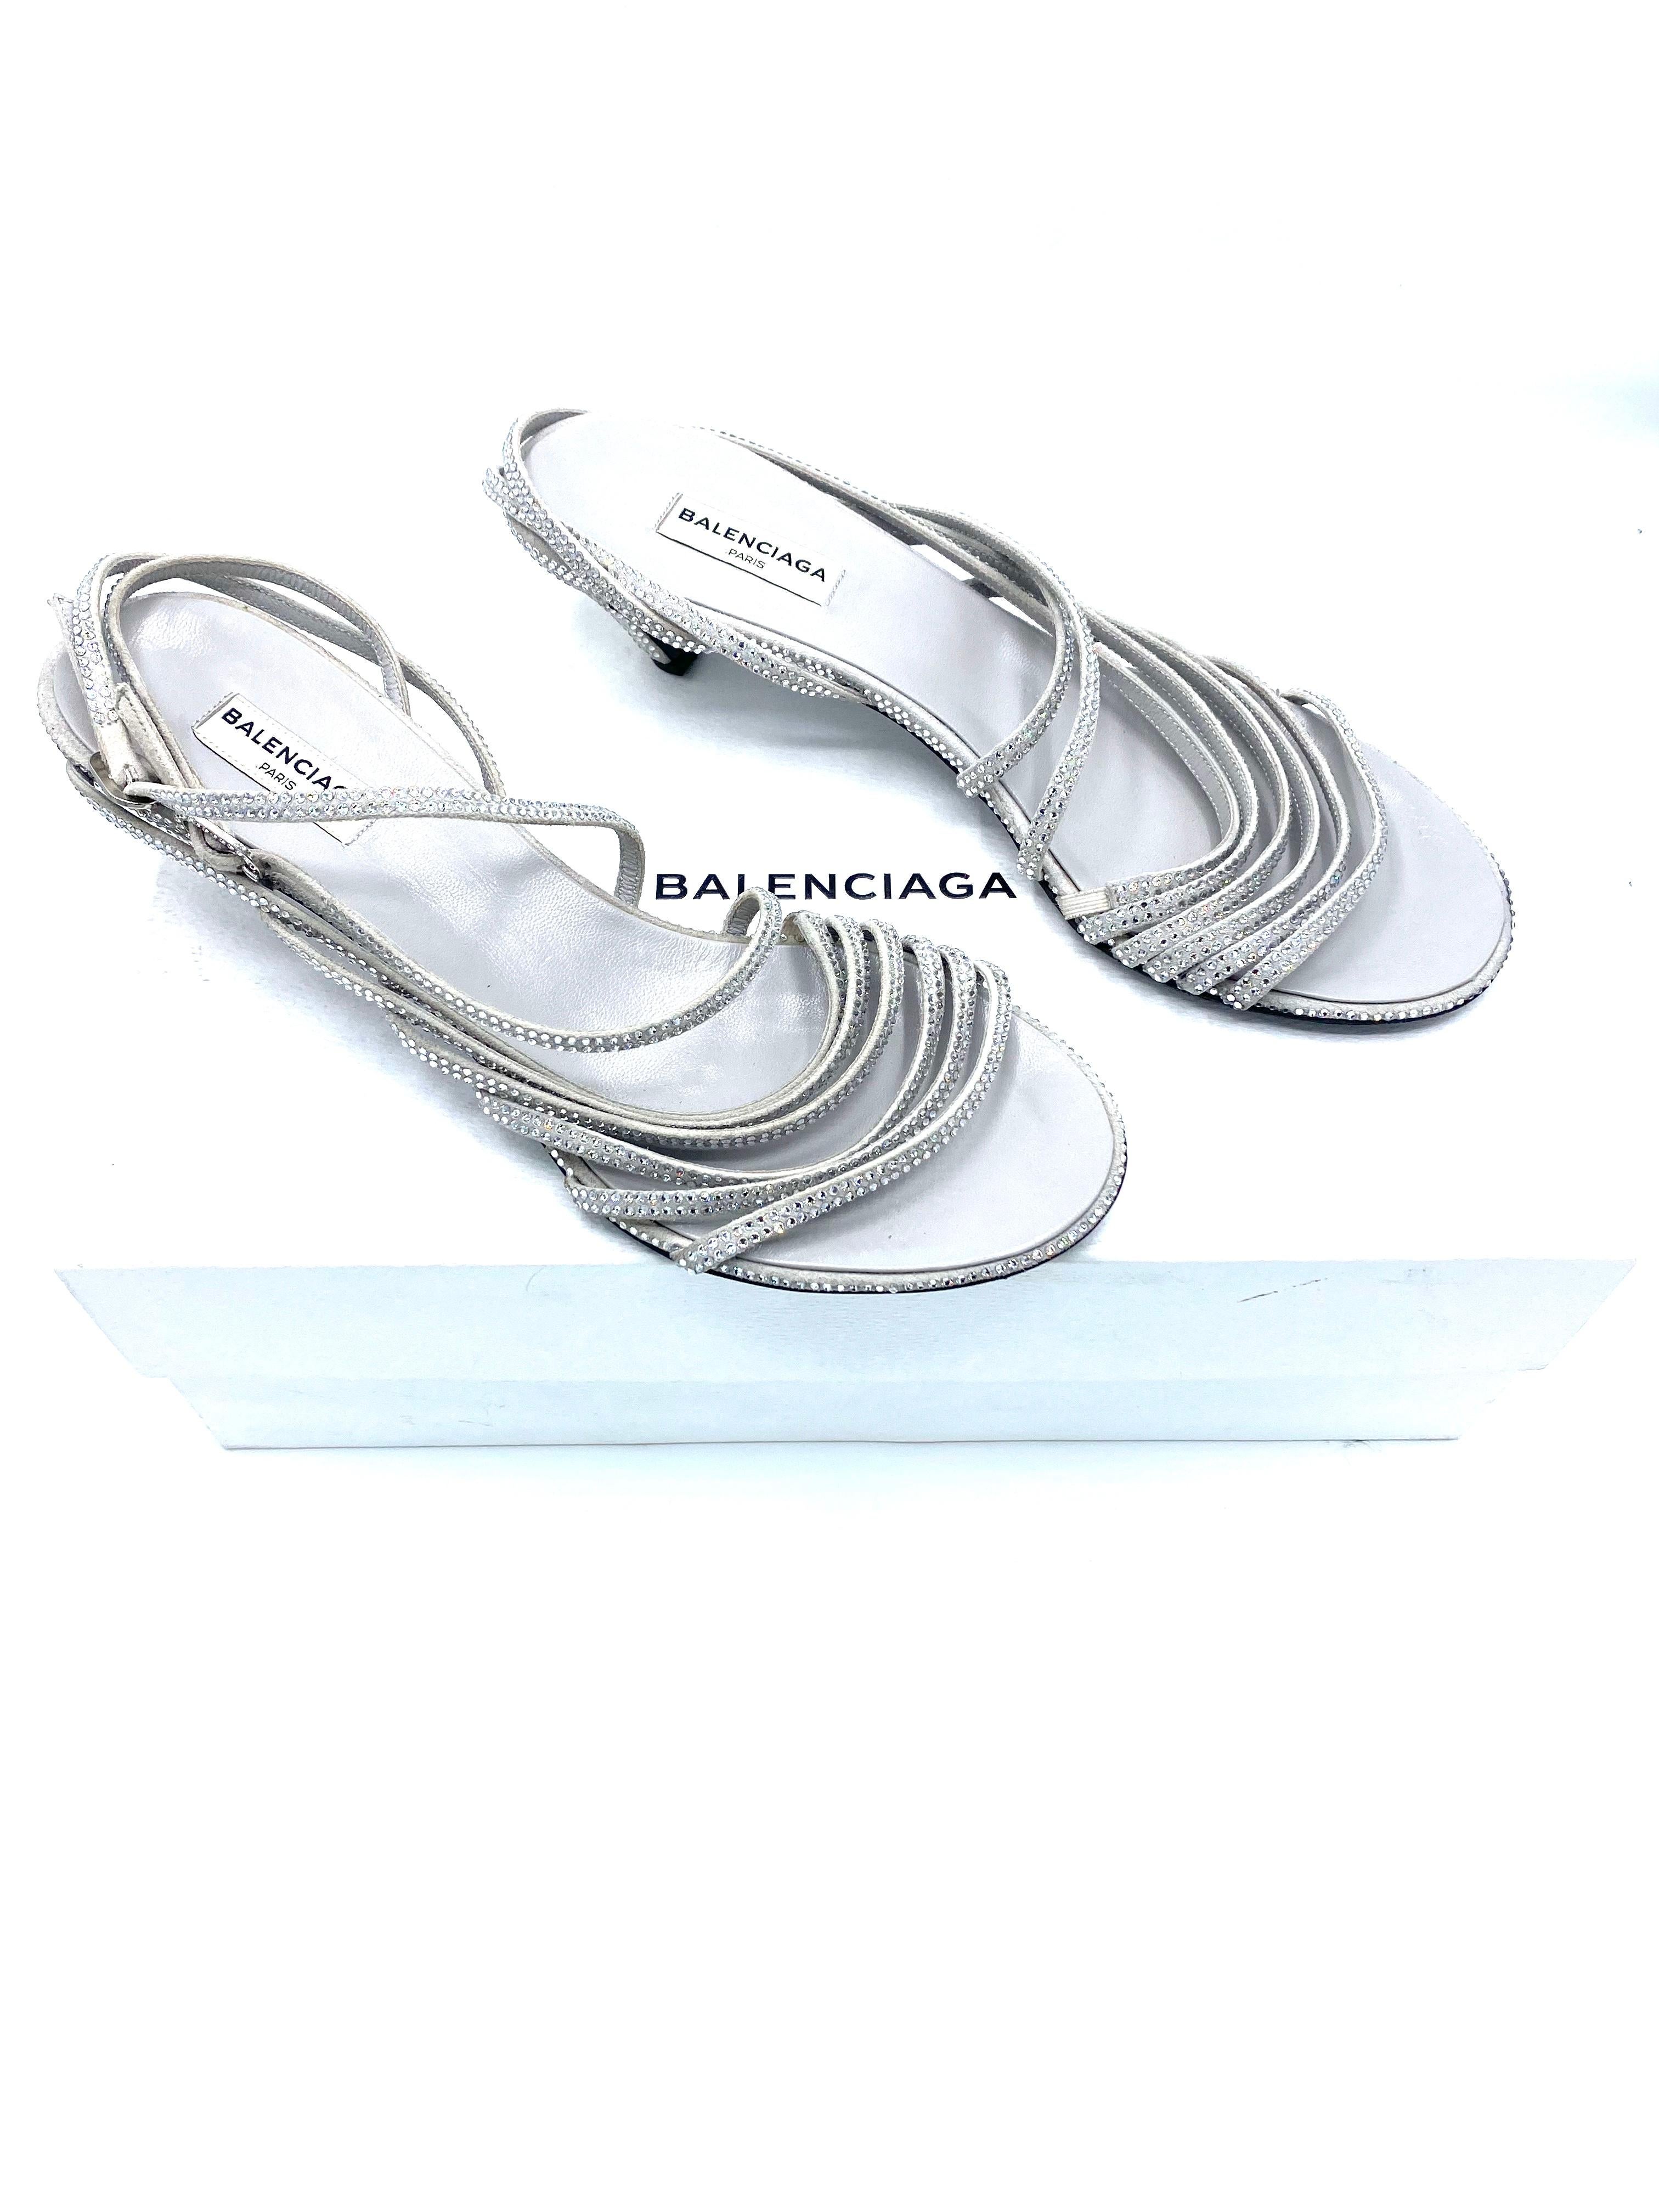 Balenciaga Crystal Embellished Grey Suede Strappy Heels Sandals Size 39  7